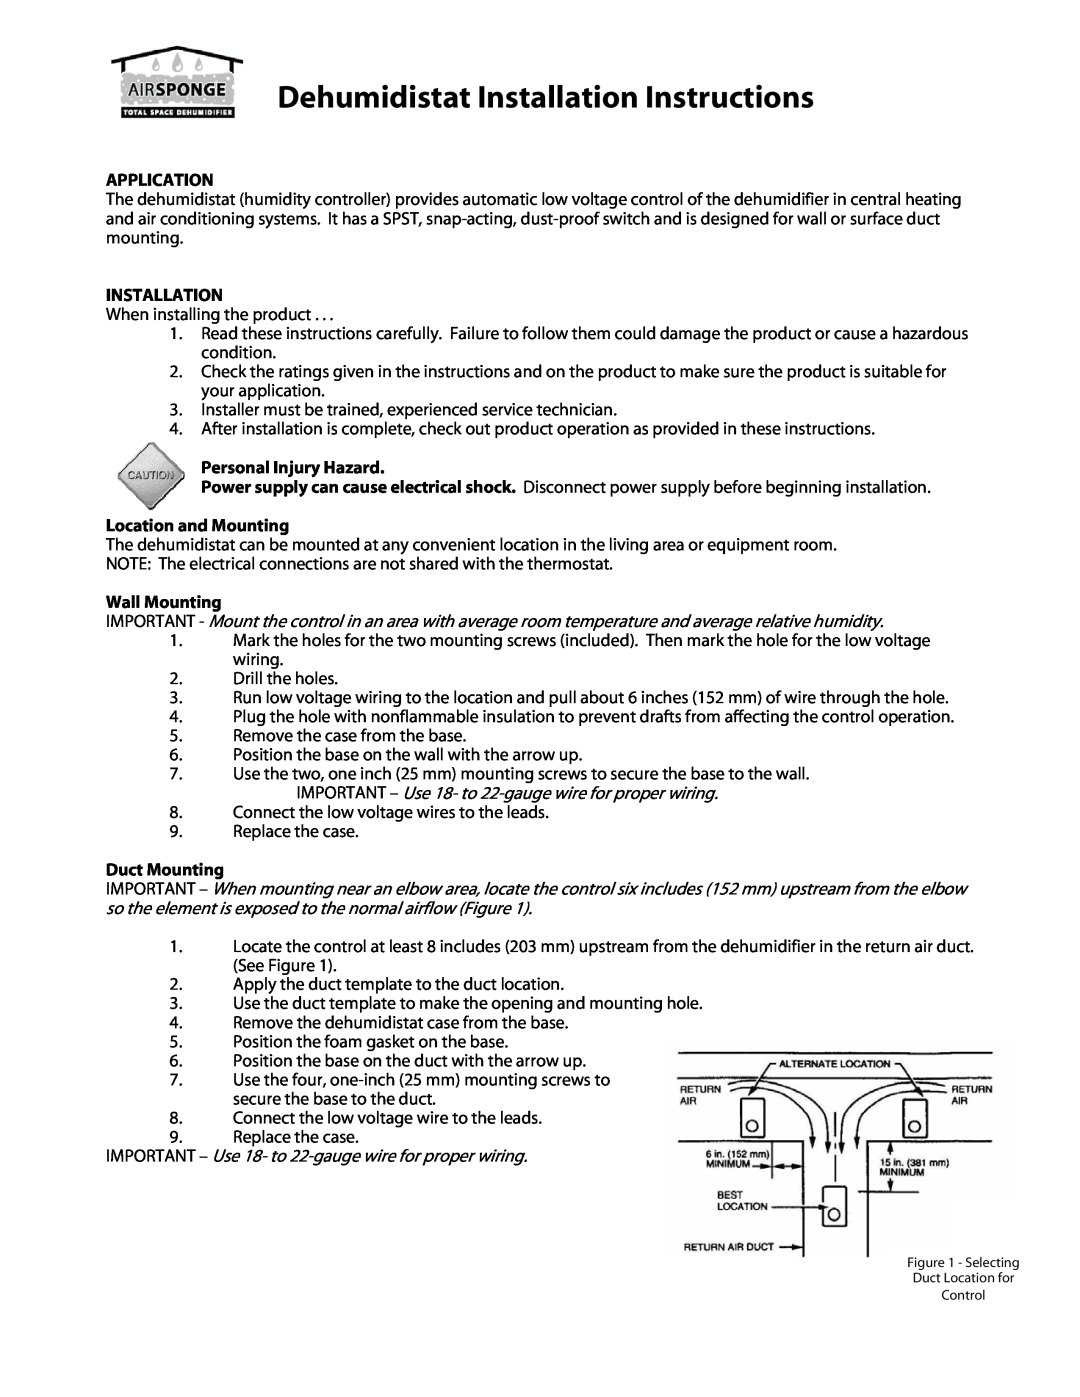 Williams Airsponge installation instructions Dehumidistat Installation Instructions, Application, Personal Injury Hazard 